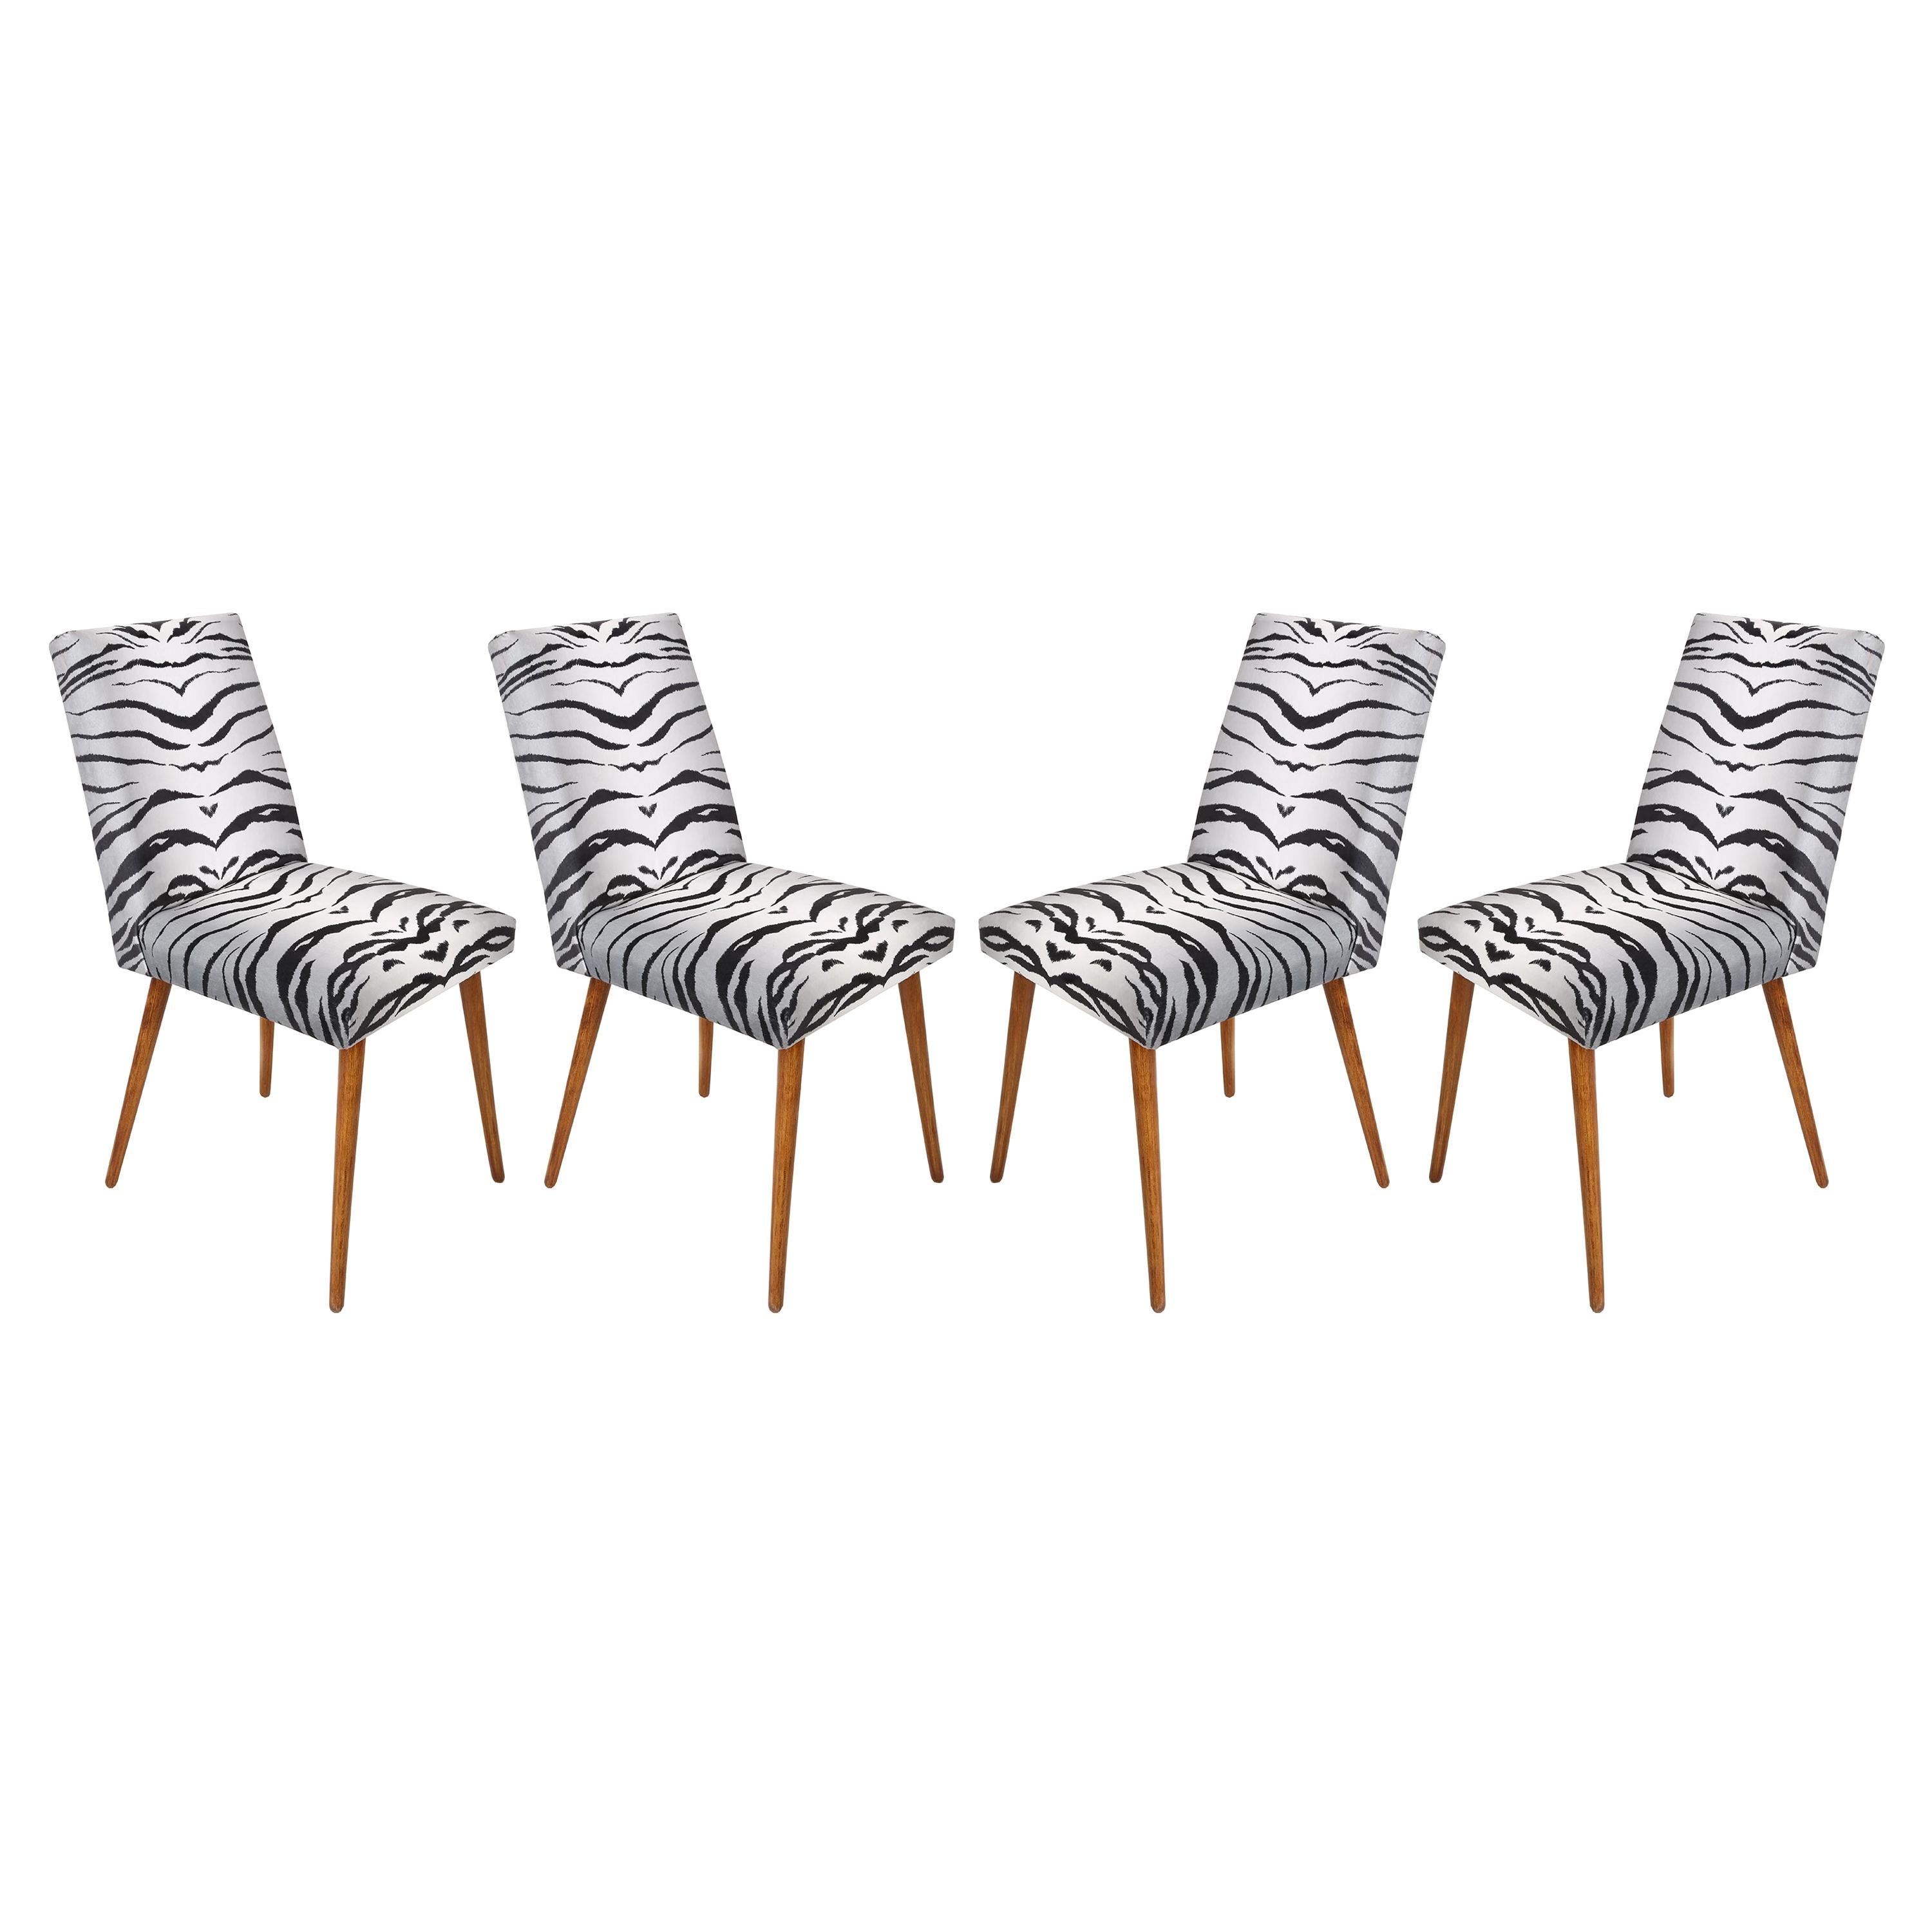 Set of Four 20th Century Black and White Zebra Velvet Chairs, Europe, 1960s For Sale